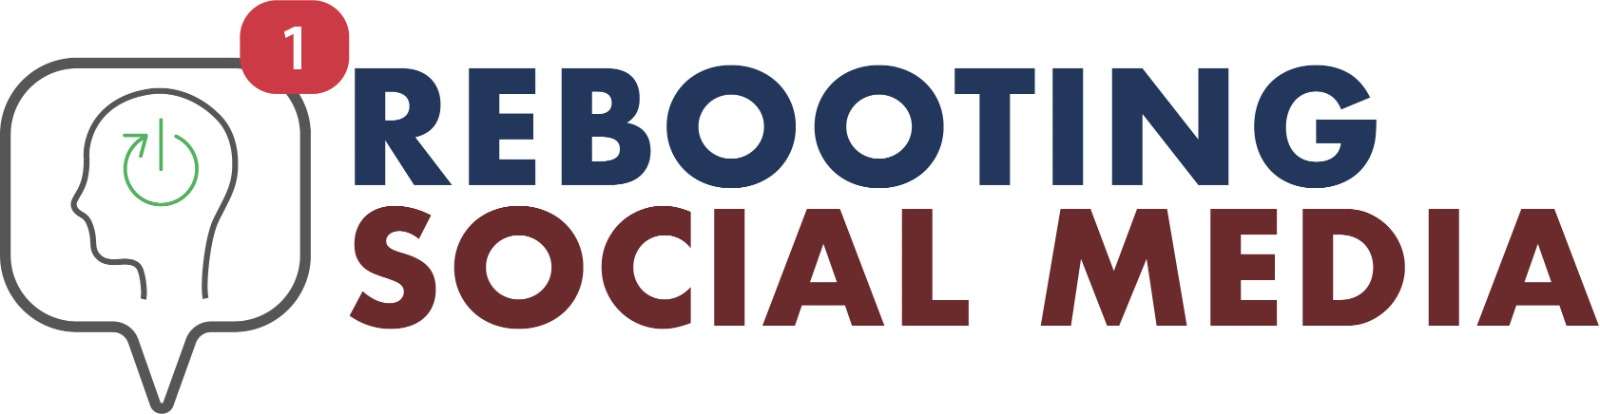 rebooting social media Logo